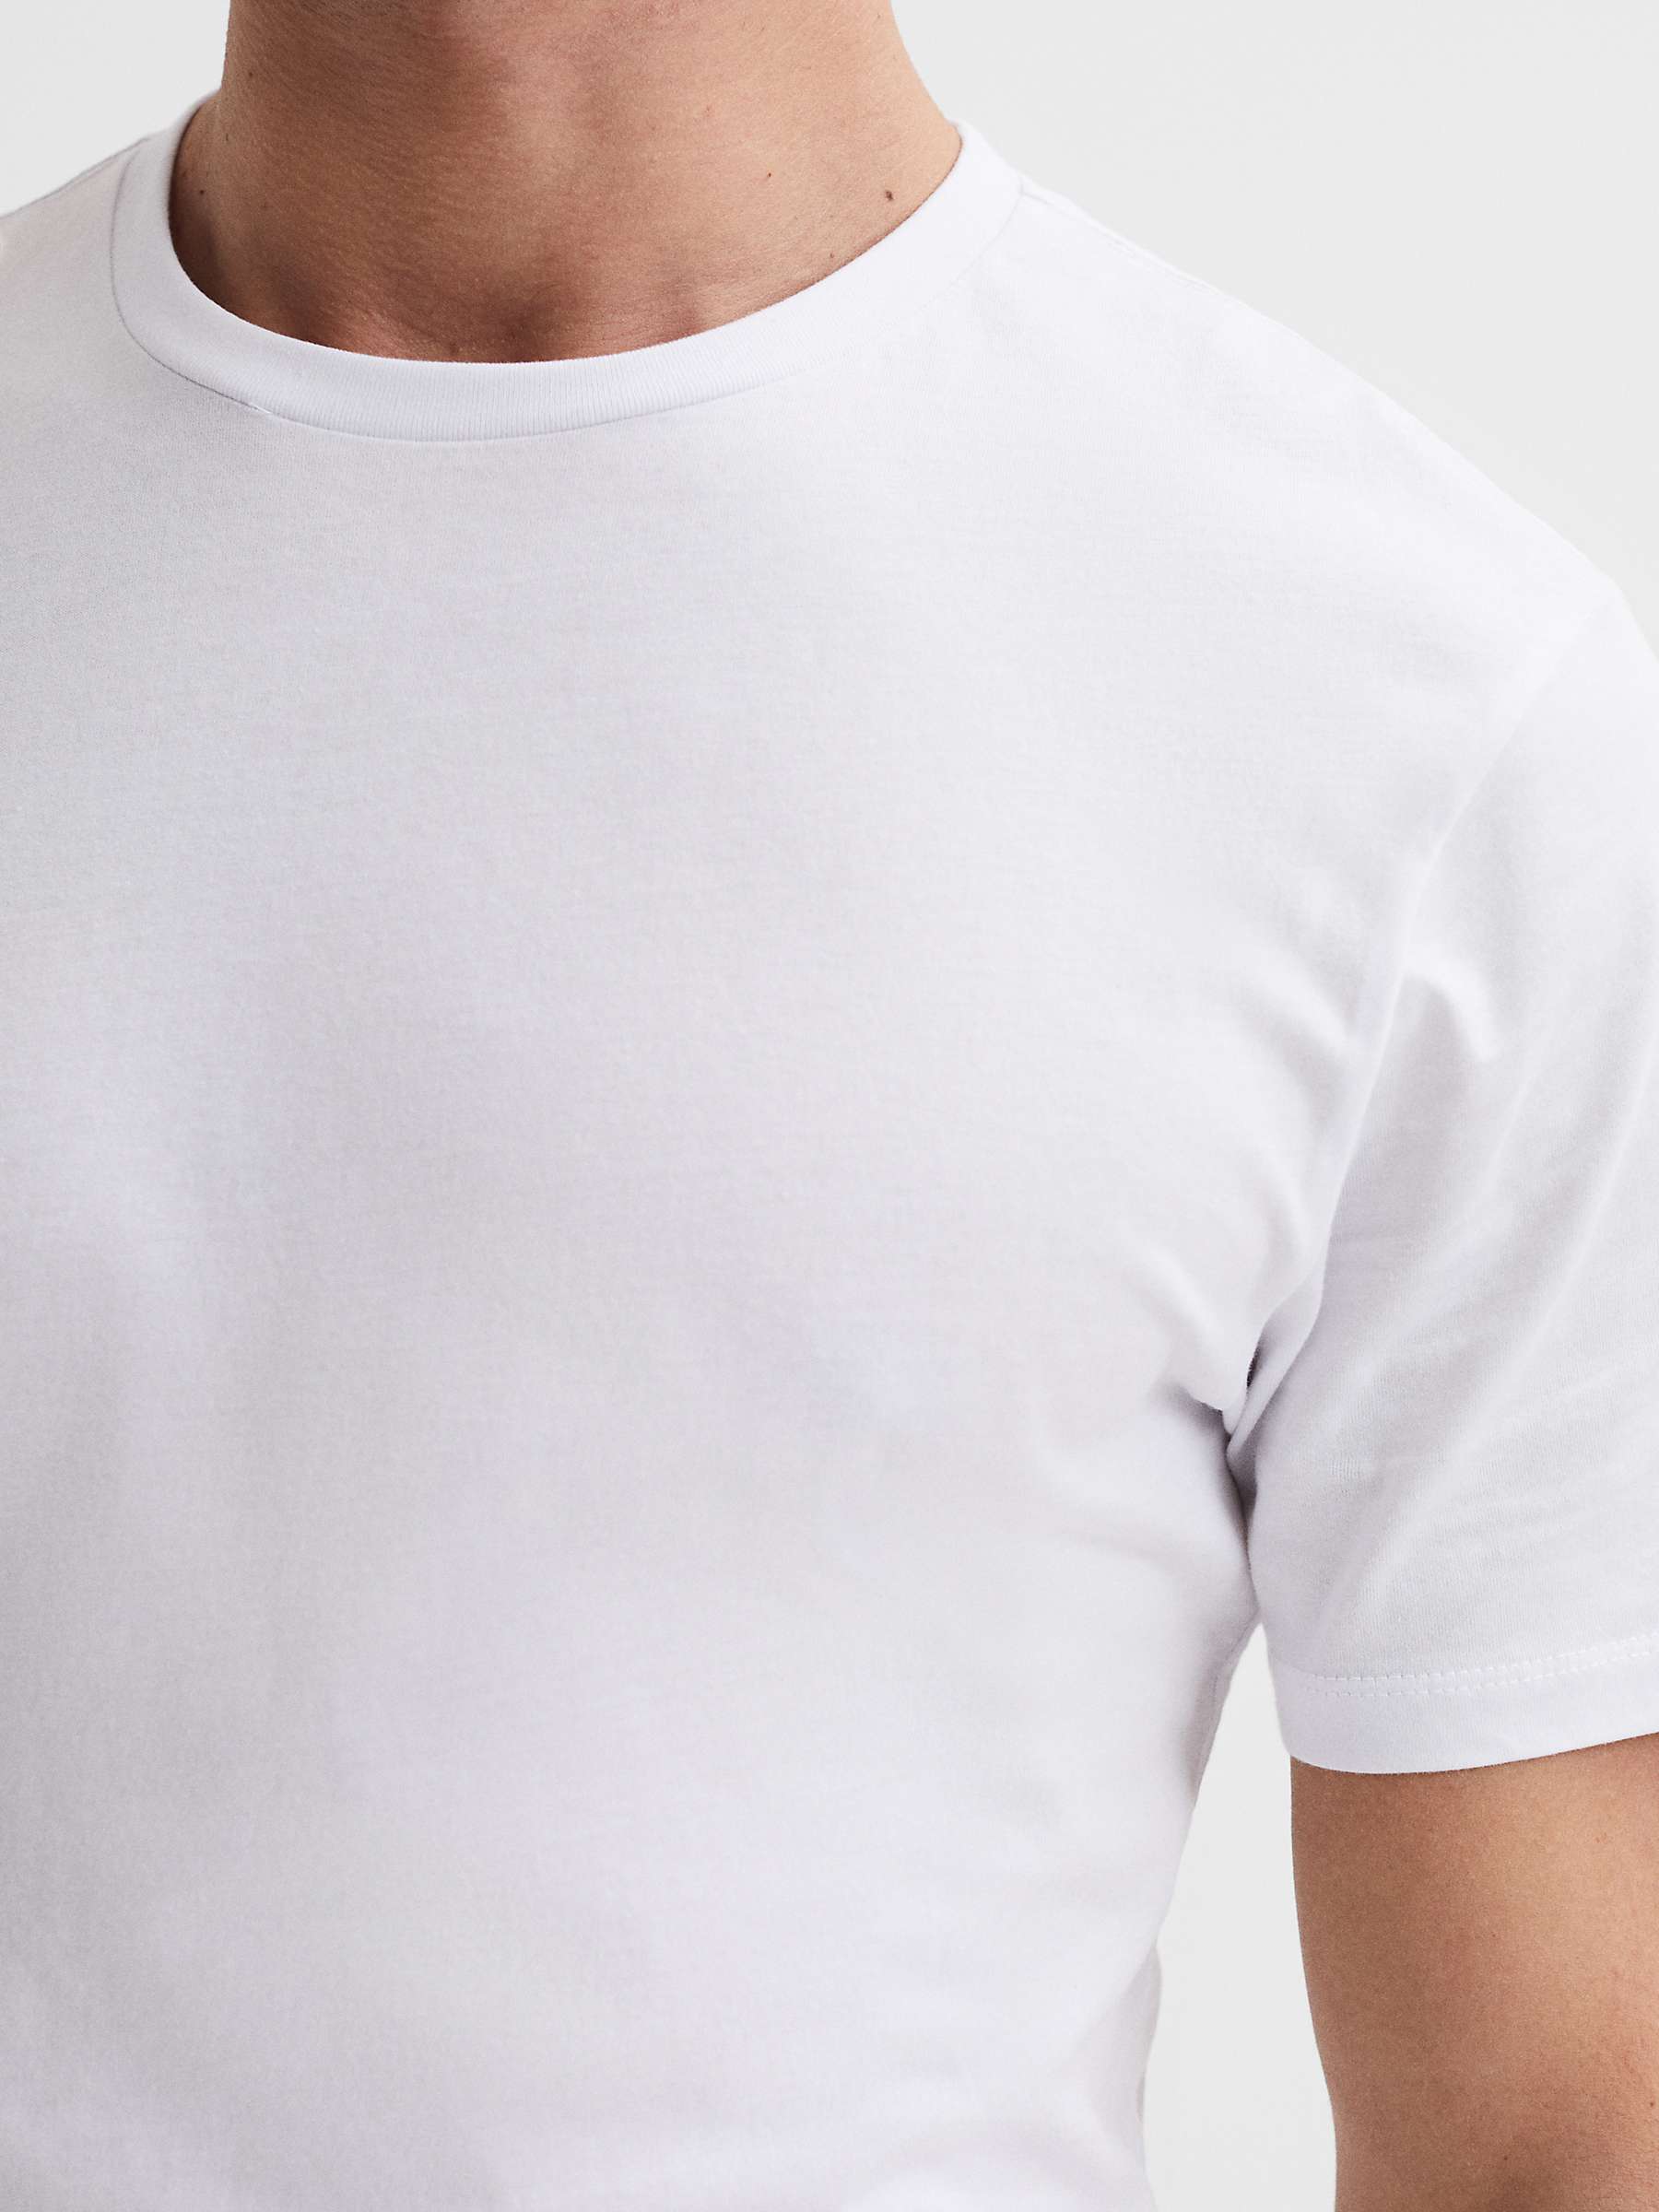 Buy Reiss Bless T-Shirt, Pack of 3, White Online at johnlewis.com